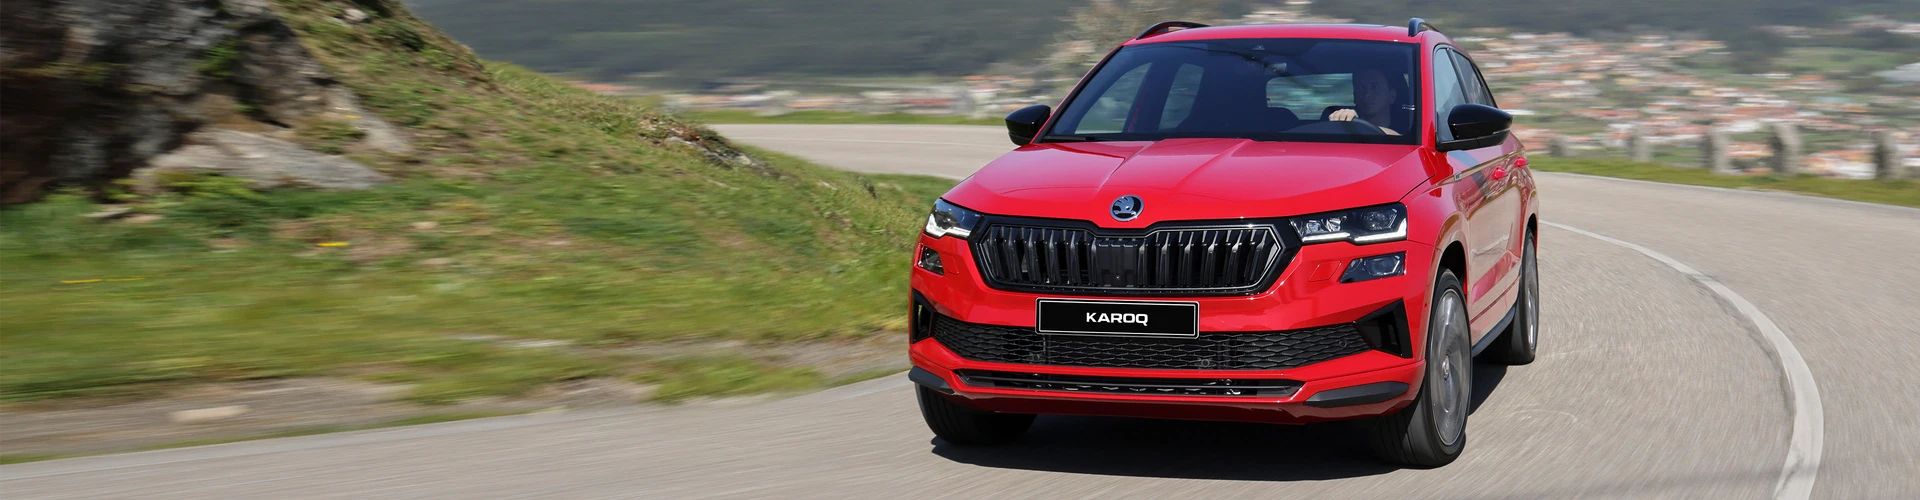 ŠKODA confirms 2023 Model Year updates for new KAROQ SUV